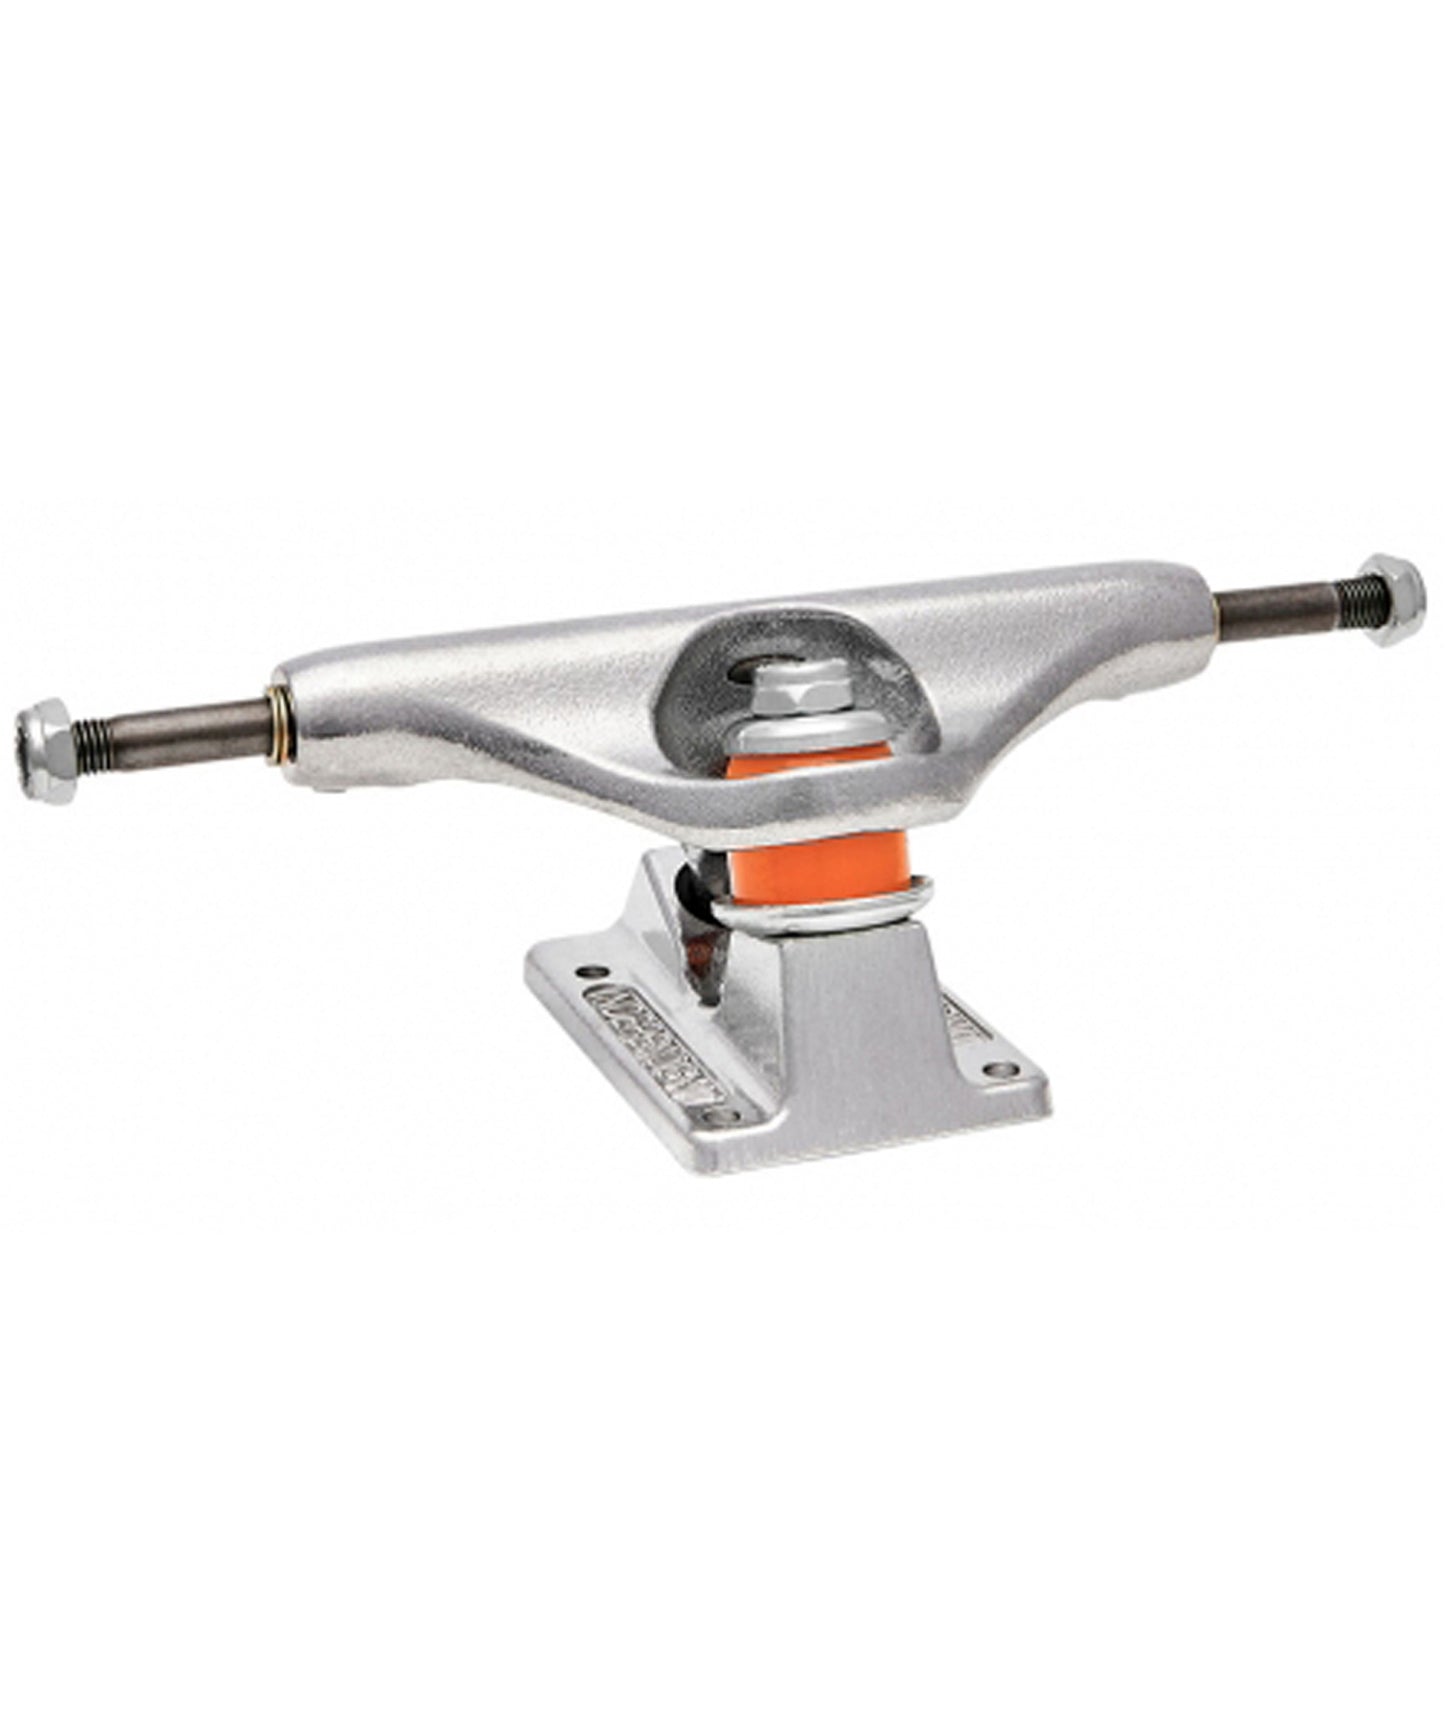 independent-standard-polished-144mm-ejes de calidad-para skate-hanger y placa base de aluminio-duraderos-independent-marca reputada en ejes.